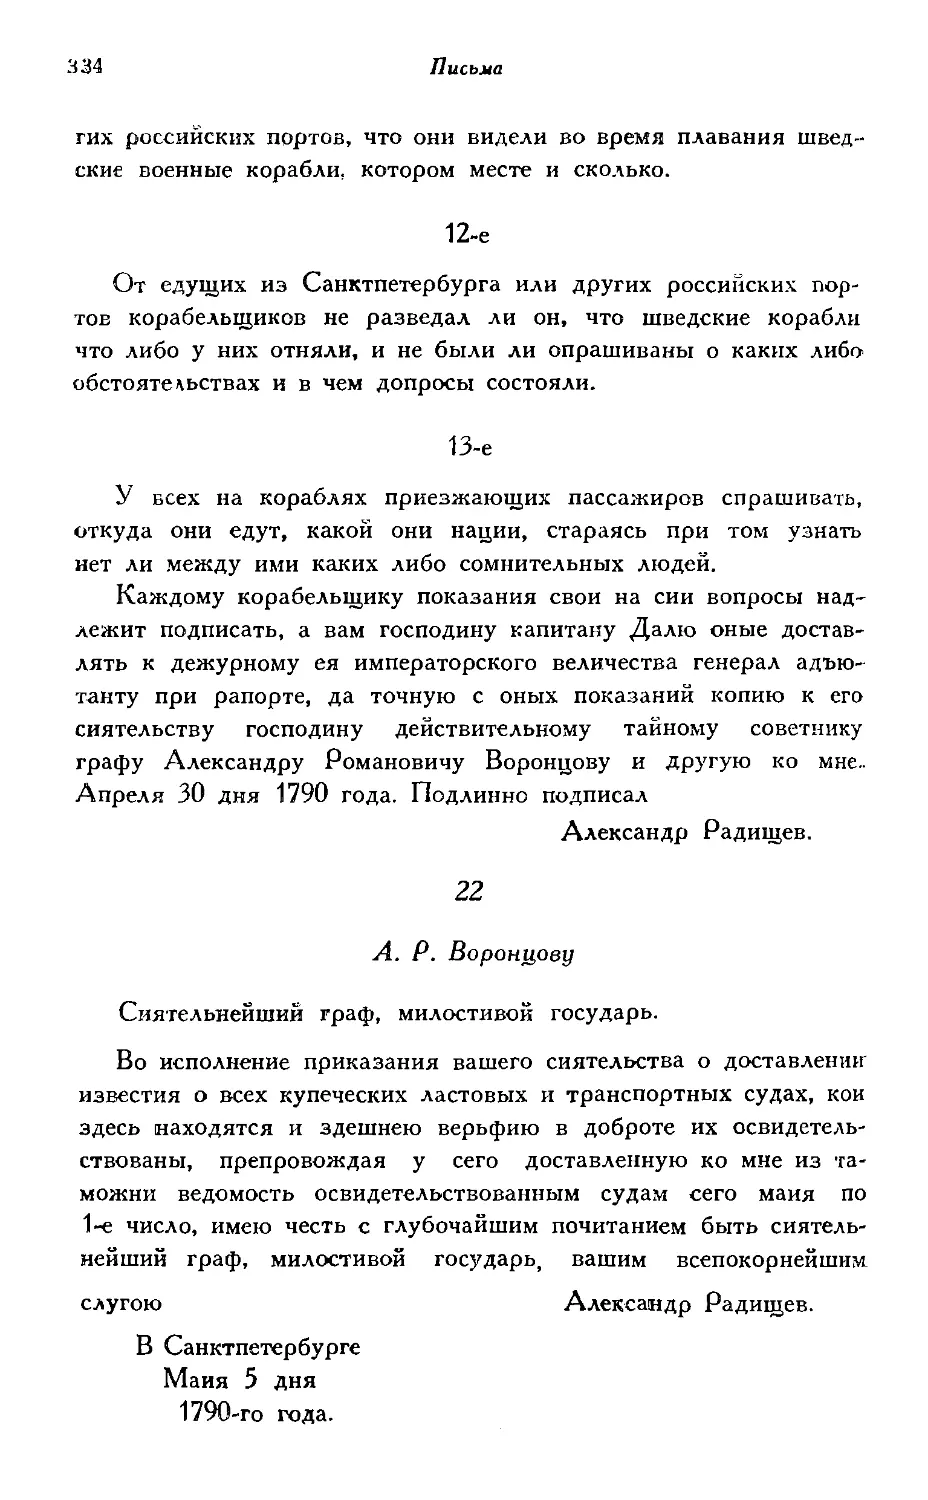 22—27. А. Р. Воронцову (1790 г.)